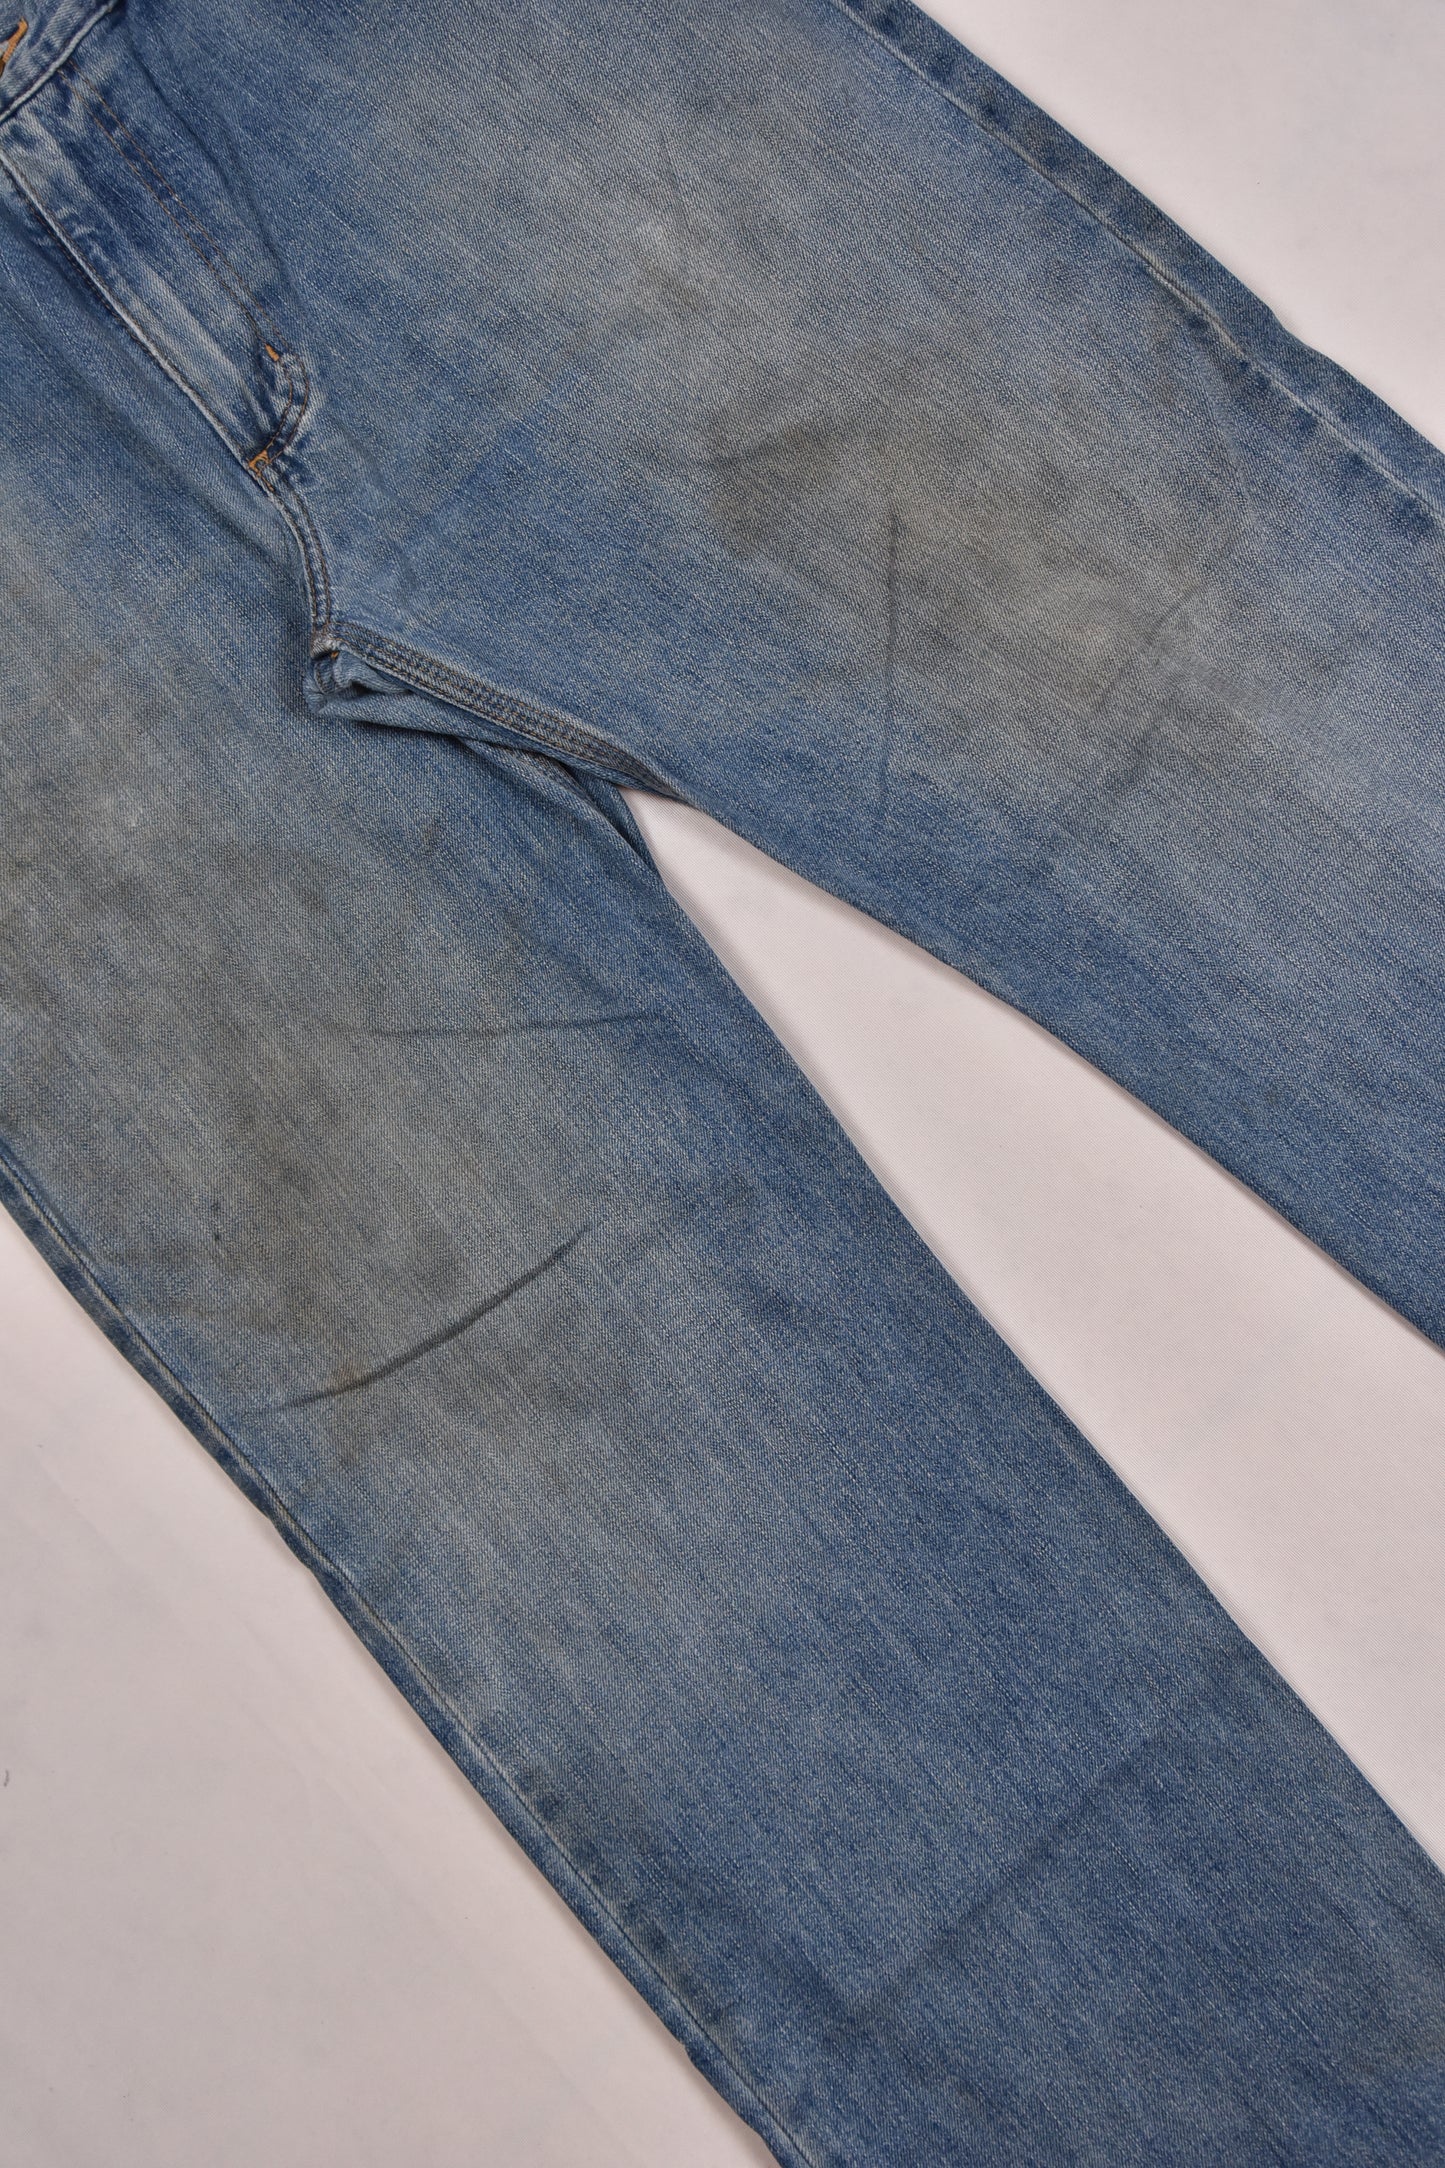 Carhartt Jeans Vintage / 36x30